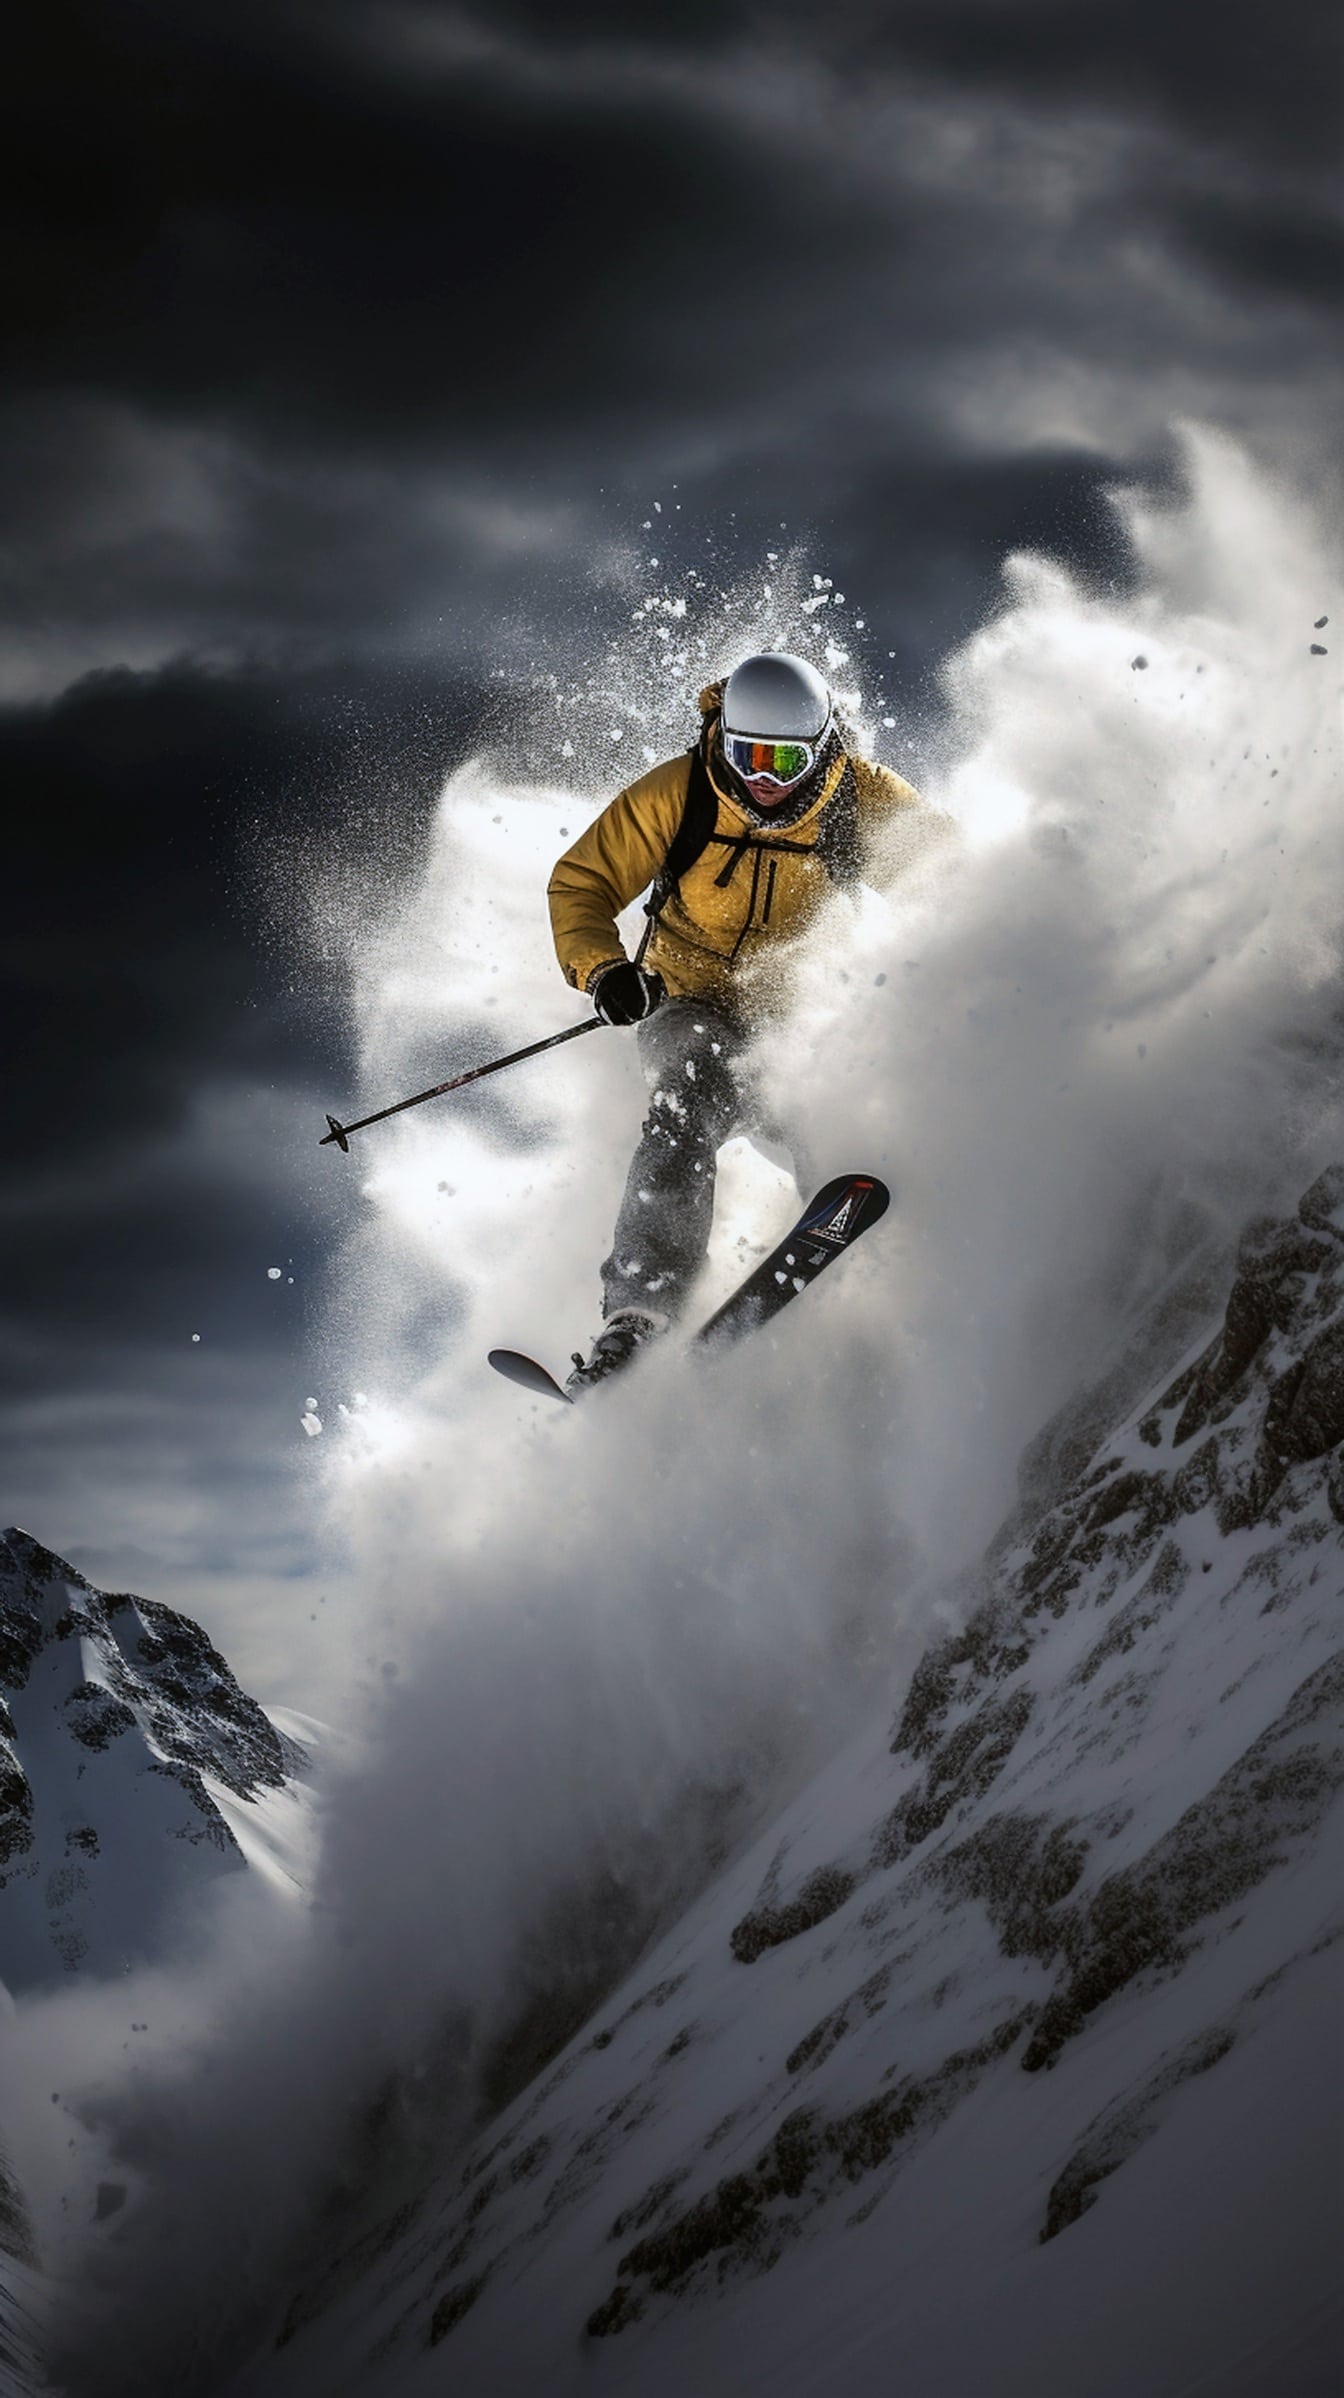 Pemain ski berjaket coklat kekuningan melompat dari tebing bersalju